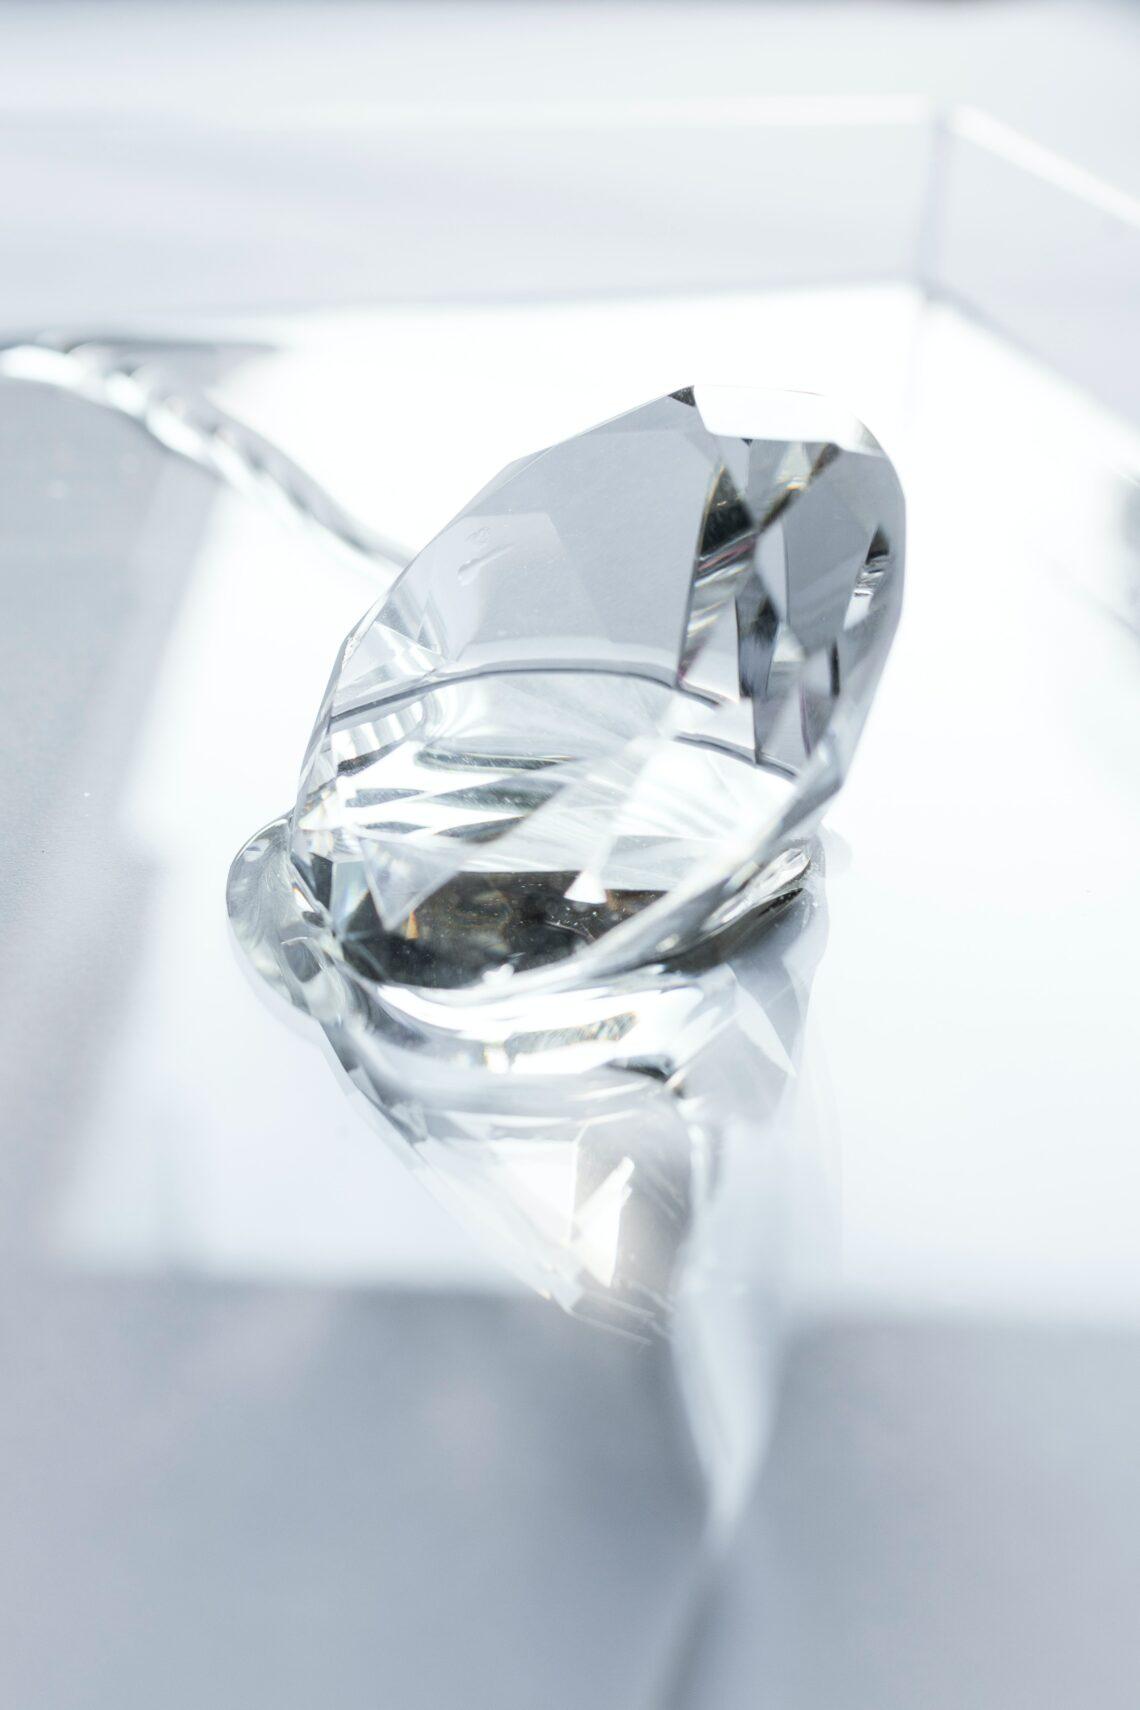 Image shows a diamond on a reflective background.